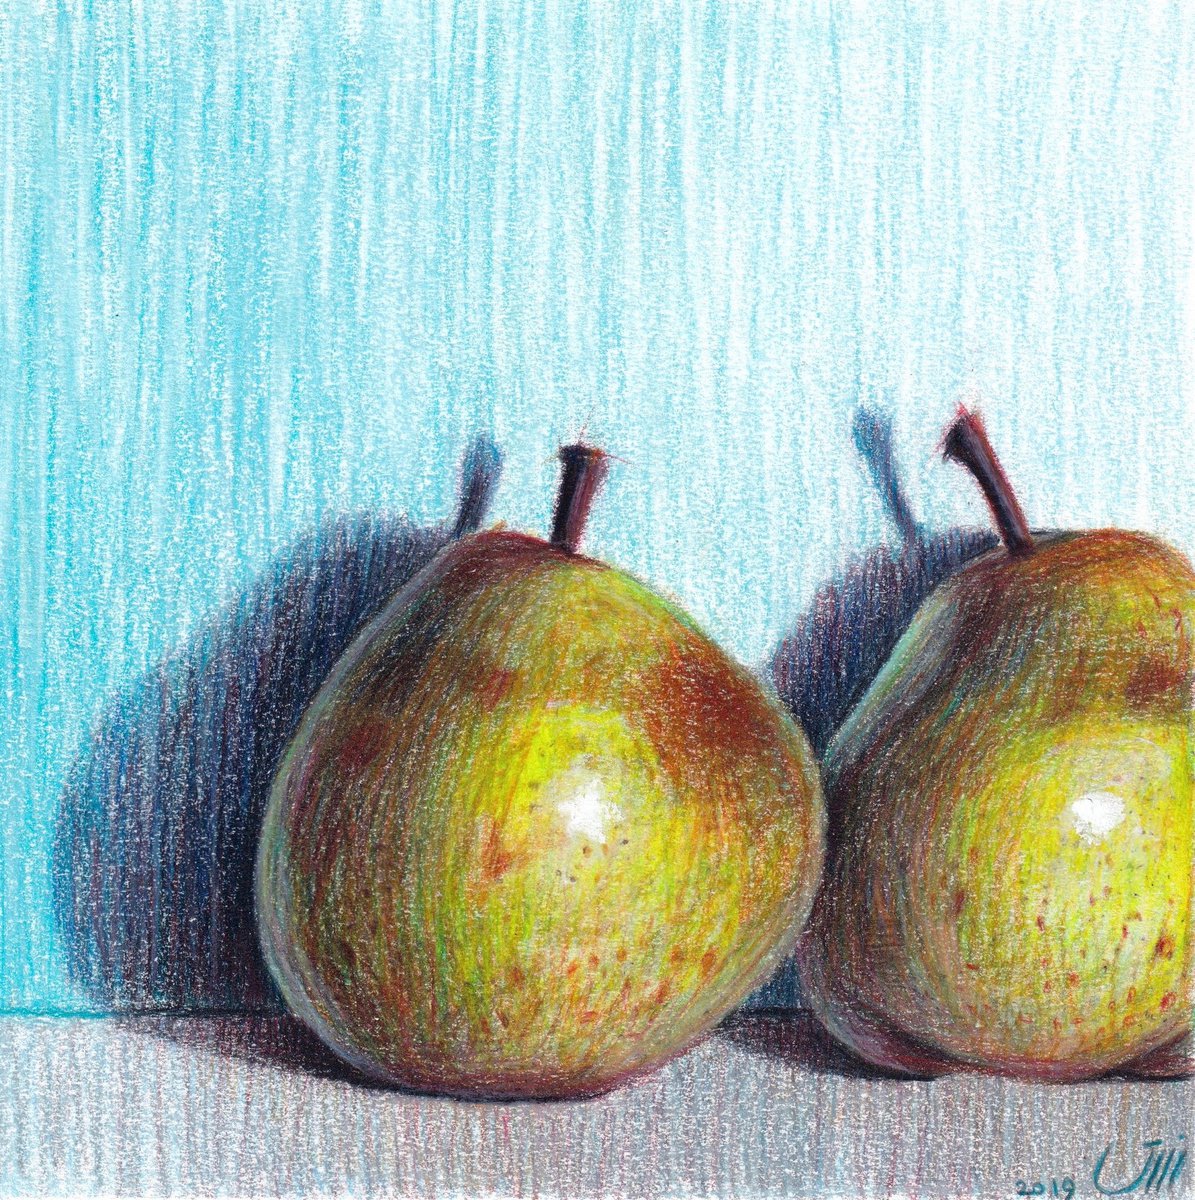 NO.168, Pears by sedigheh zoghi